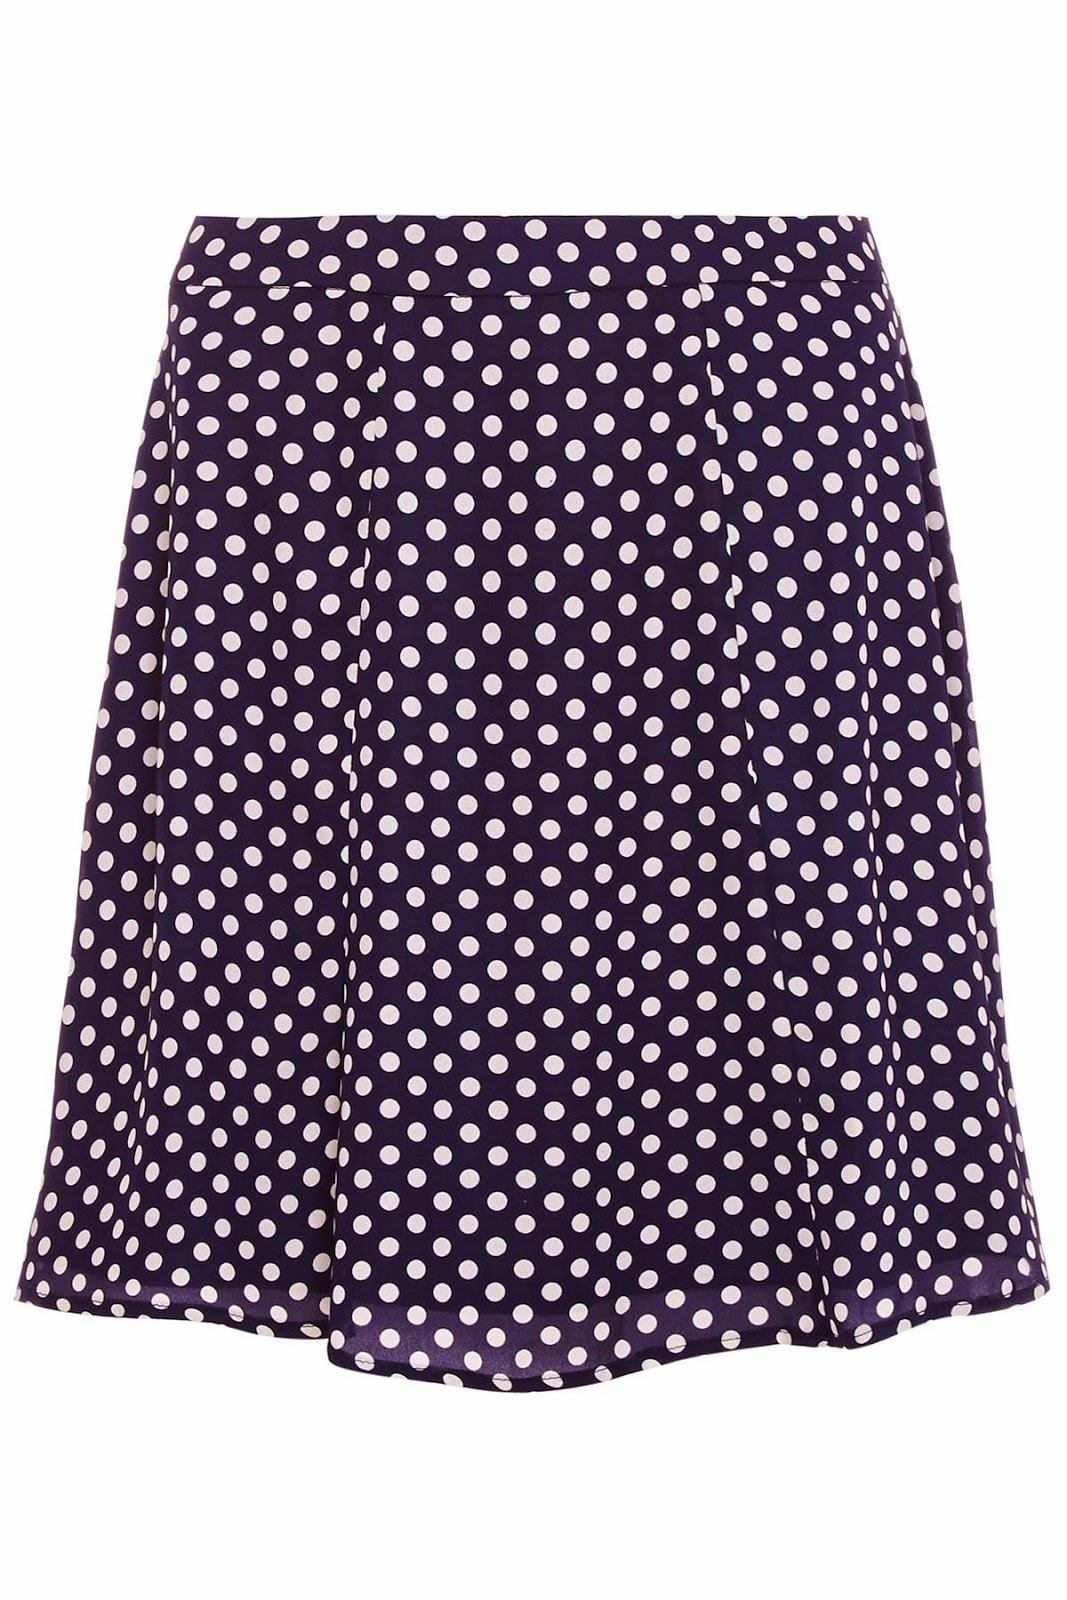 Strawberry Short Skirt: Sugarhill Boutique